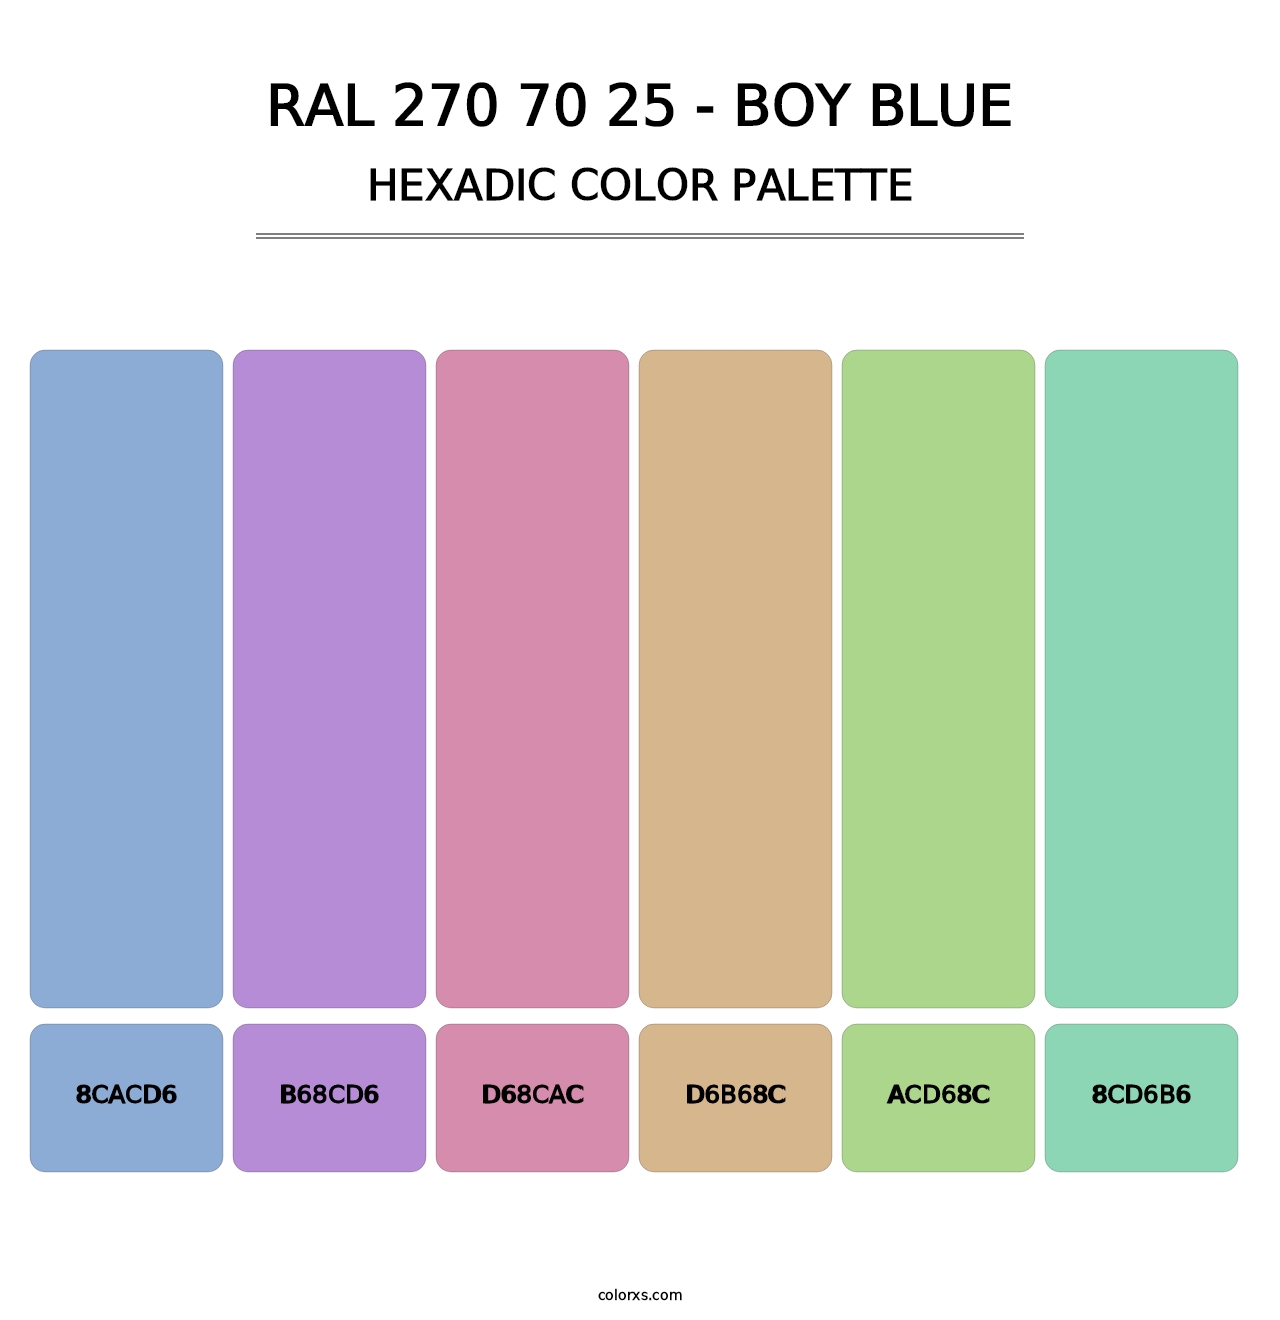 RAL 270 70 25 - Boy Blue - Hexadic Color Palette